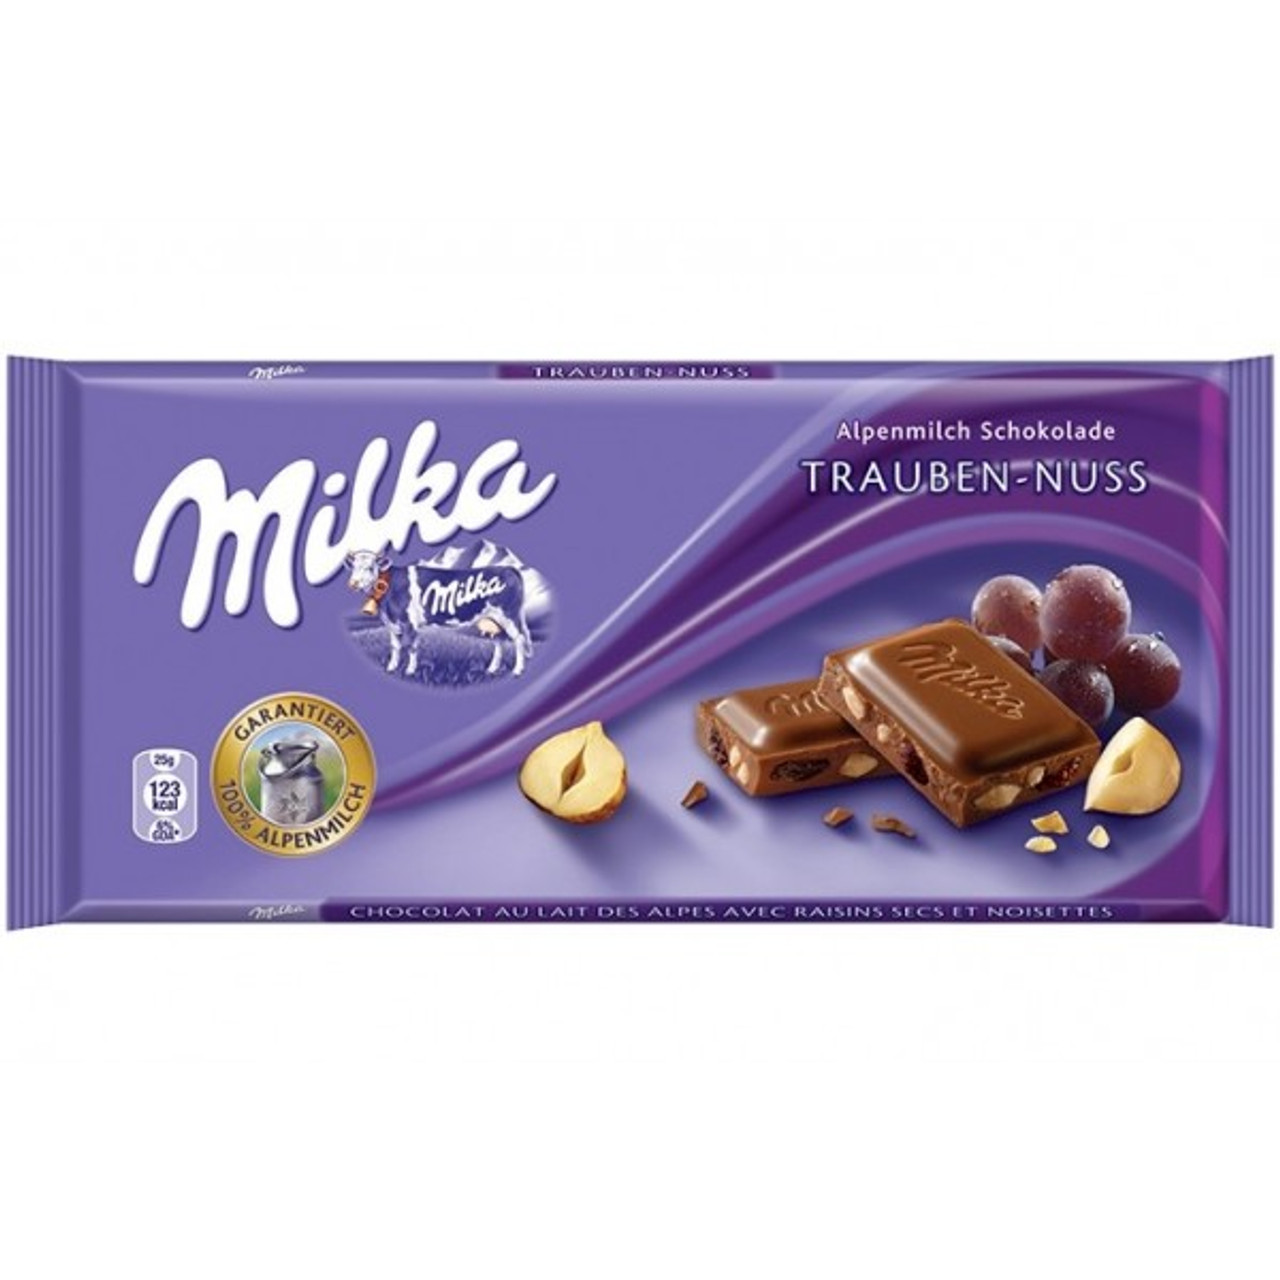 Milka Chocolate - Whole Hazelnuts - 100g